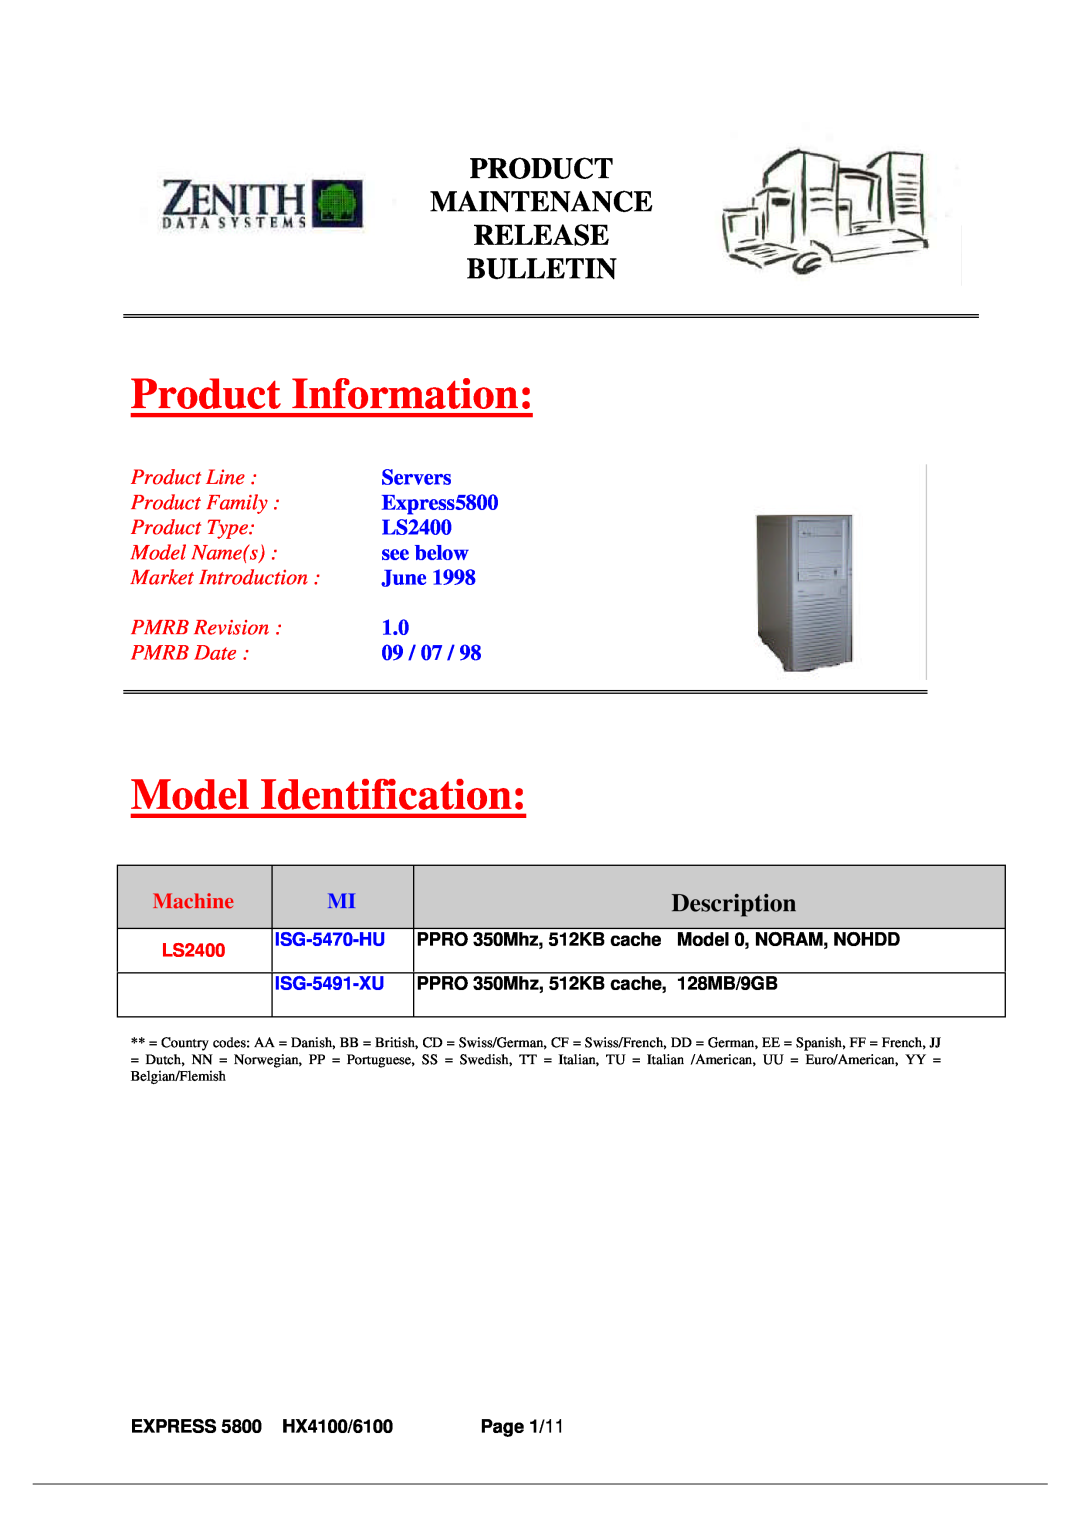 Zenith LS2400 manual Product Information, Model Identification, Product Maintenance Release Bulletin, Description, Servers 